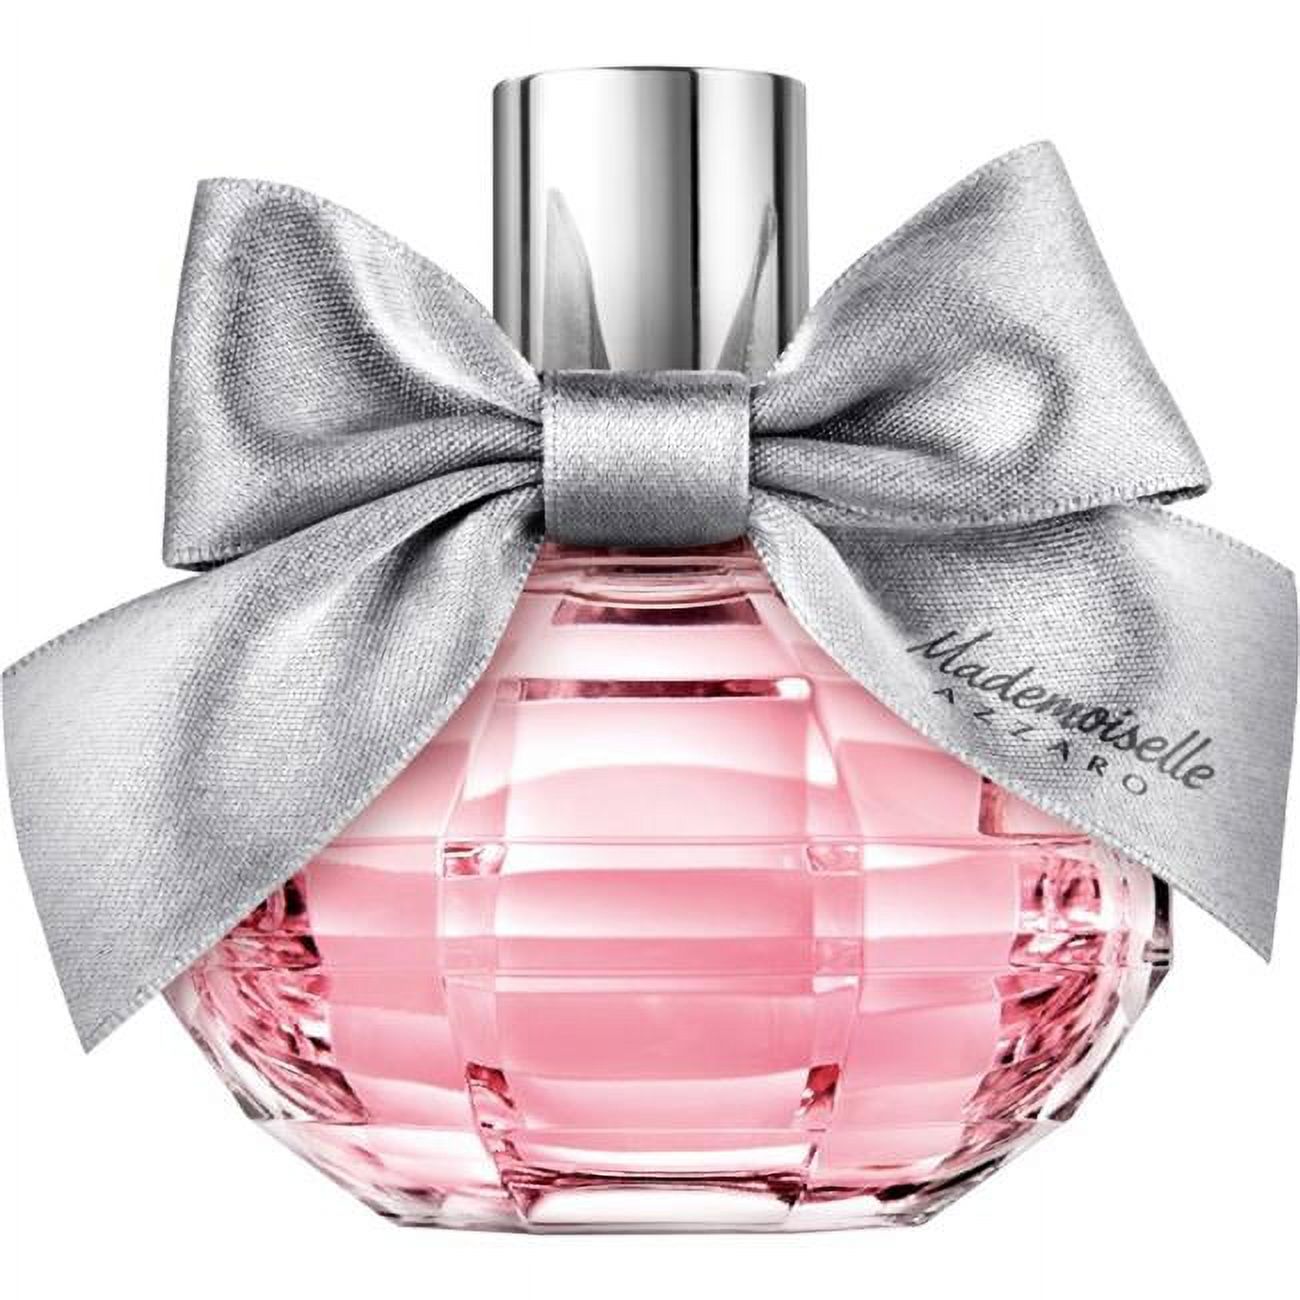 Azzaro MSLTS17 1.7 oz Mademoiselle EDT Perfume Spray for Women - image 1 of 2